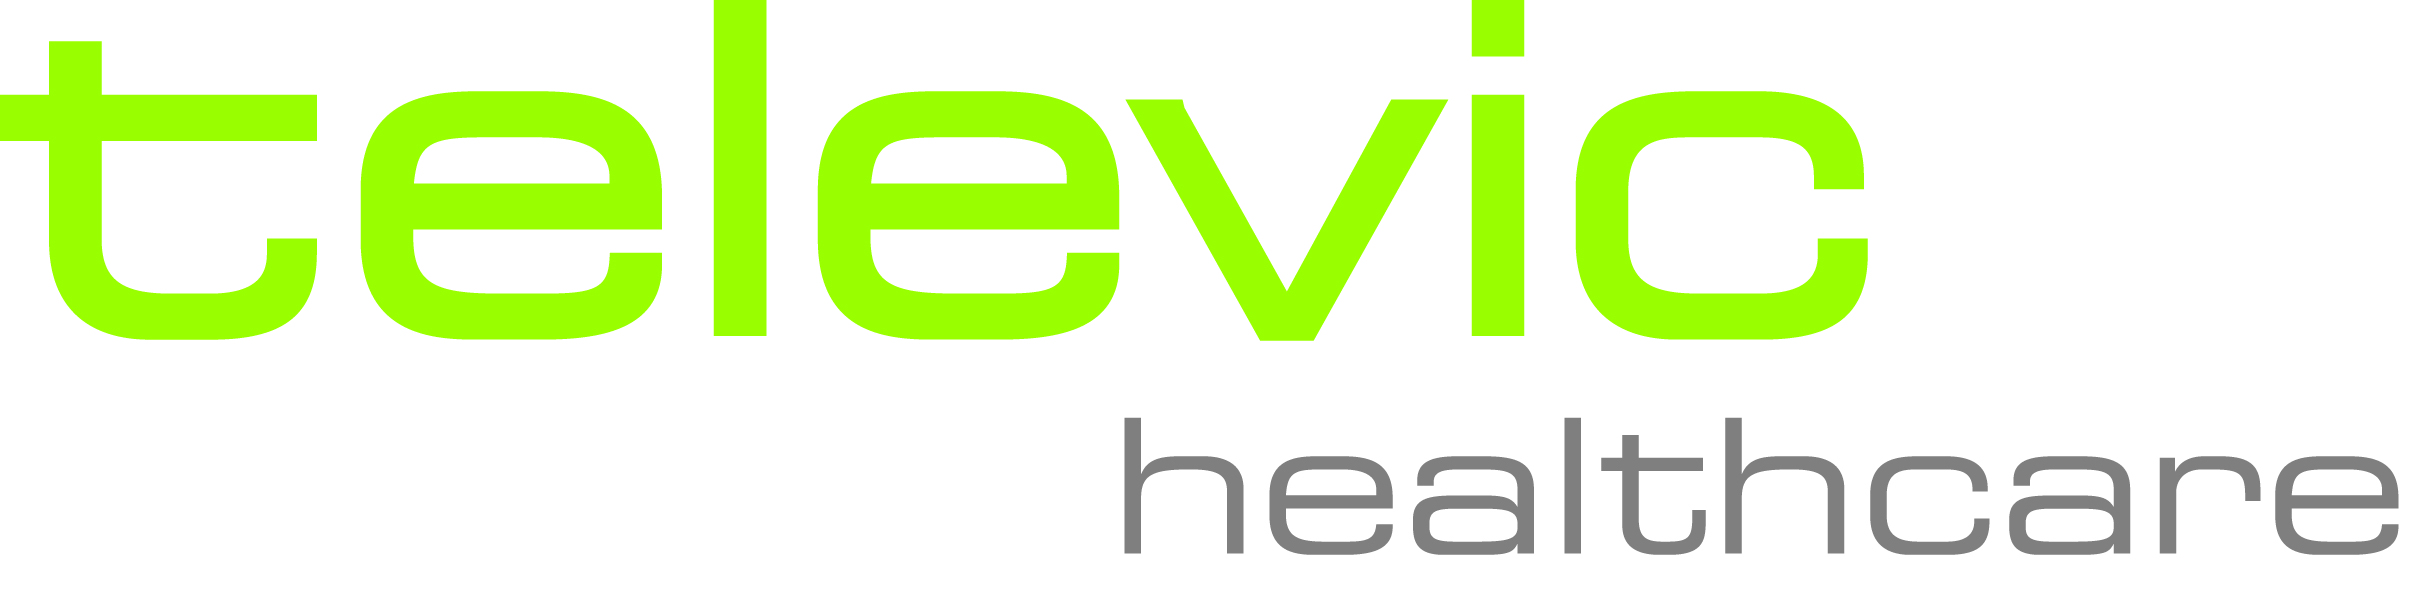 Televic healthcare logo